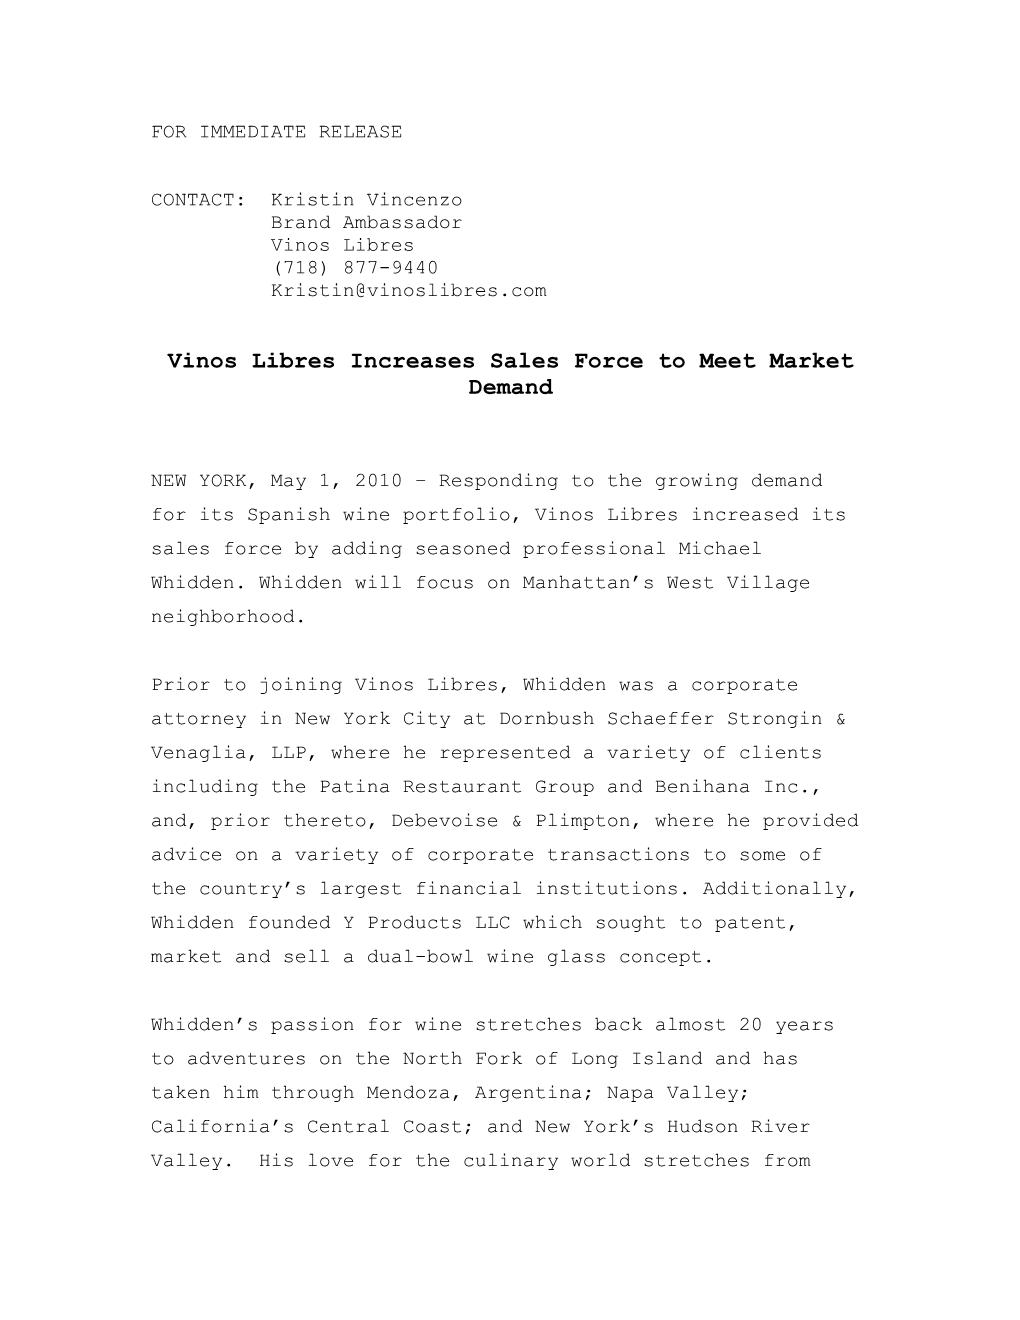 Vinos Libres Increases Sales Force to Meet Market Demand